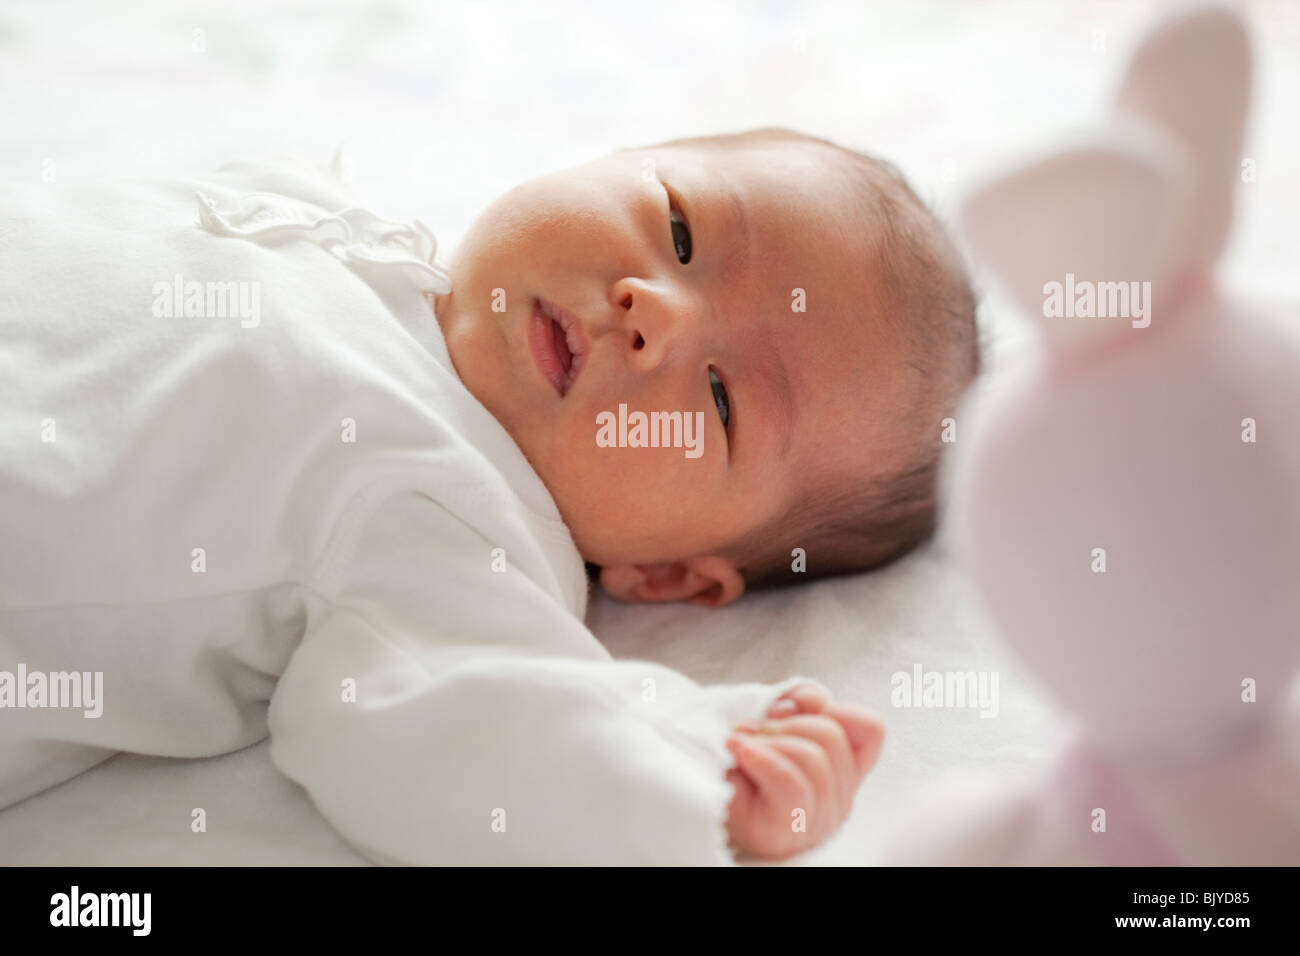 Newborn baby looking at stuffed animal Stock Photo